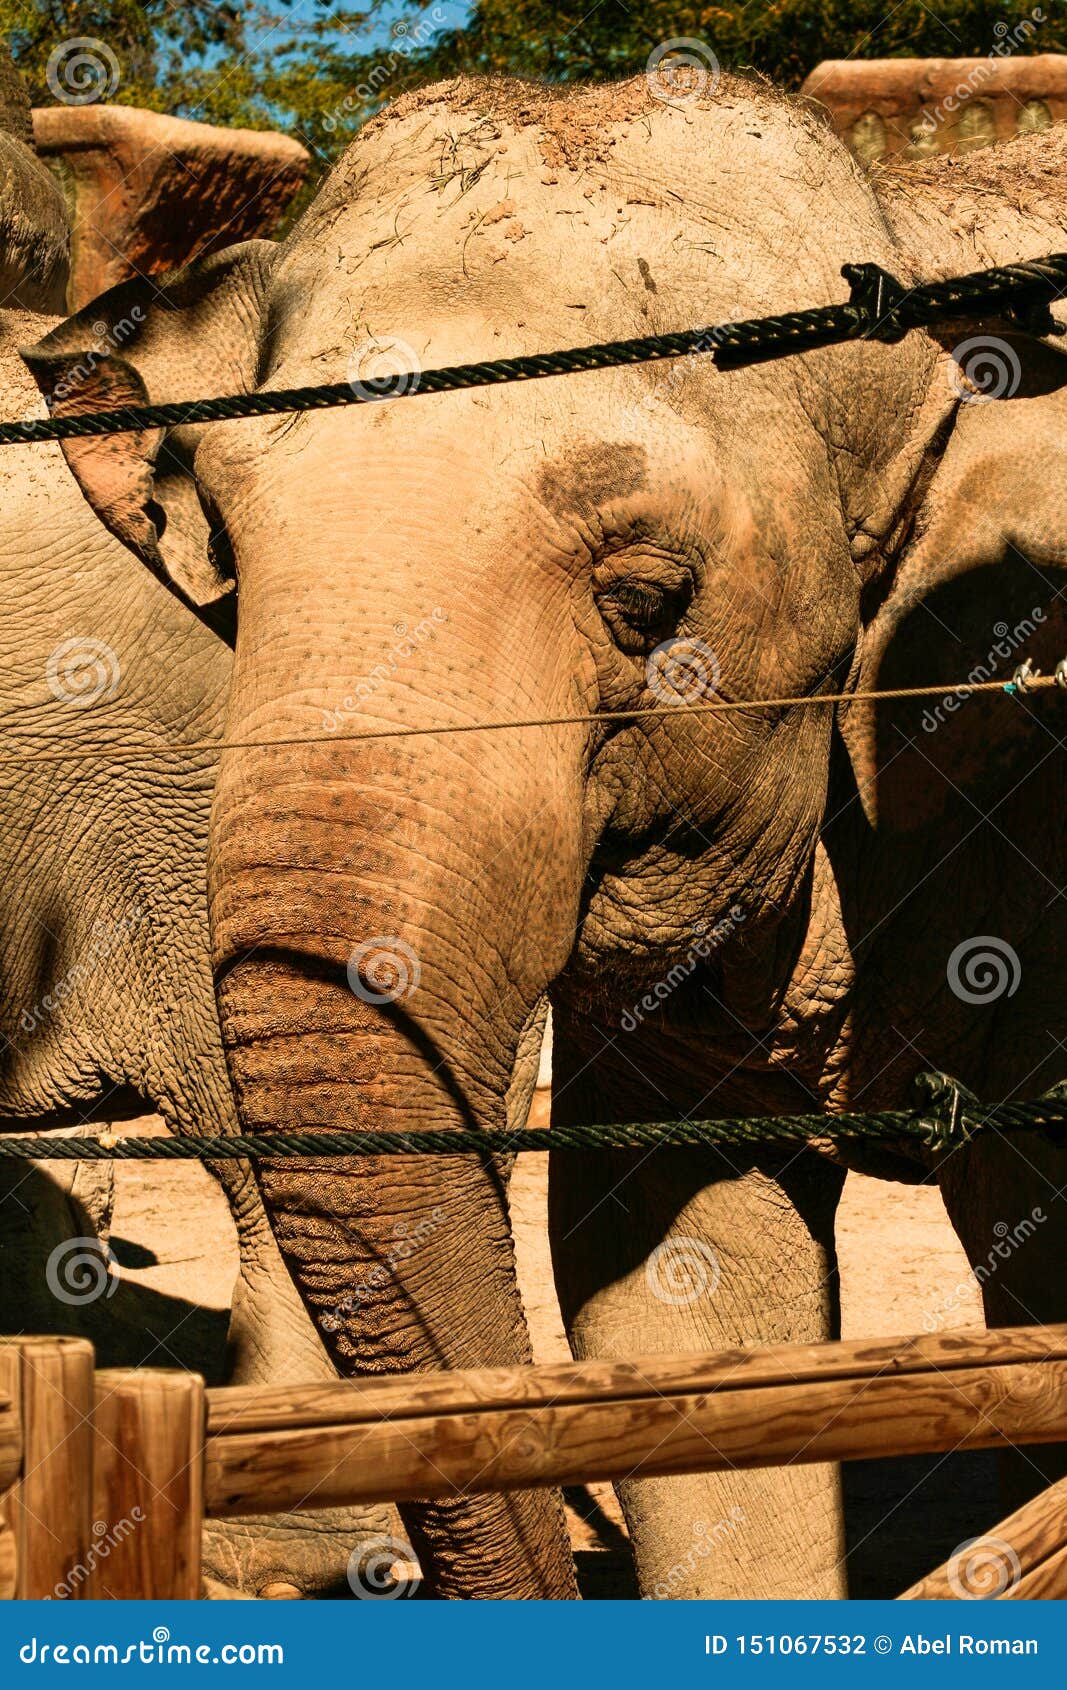 asian elephant behind a security fence